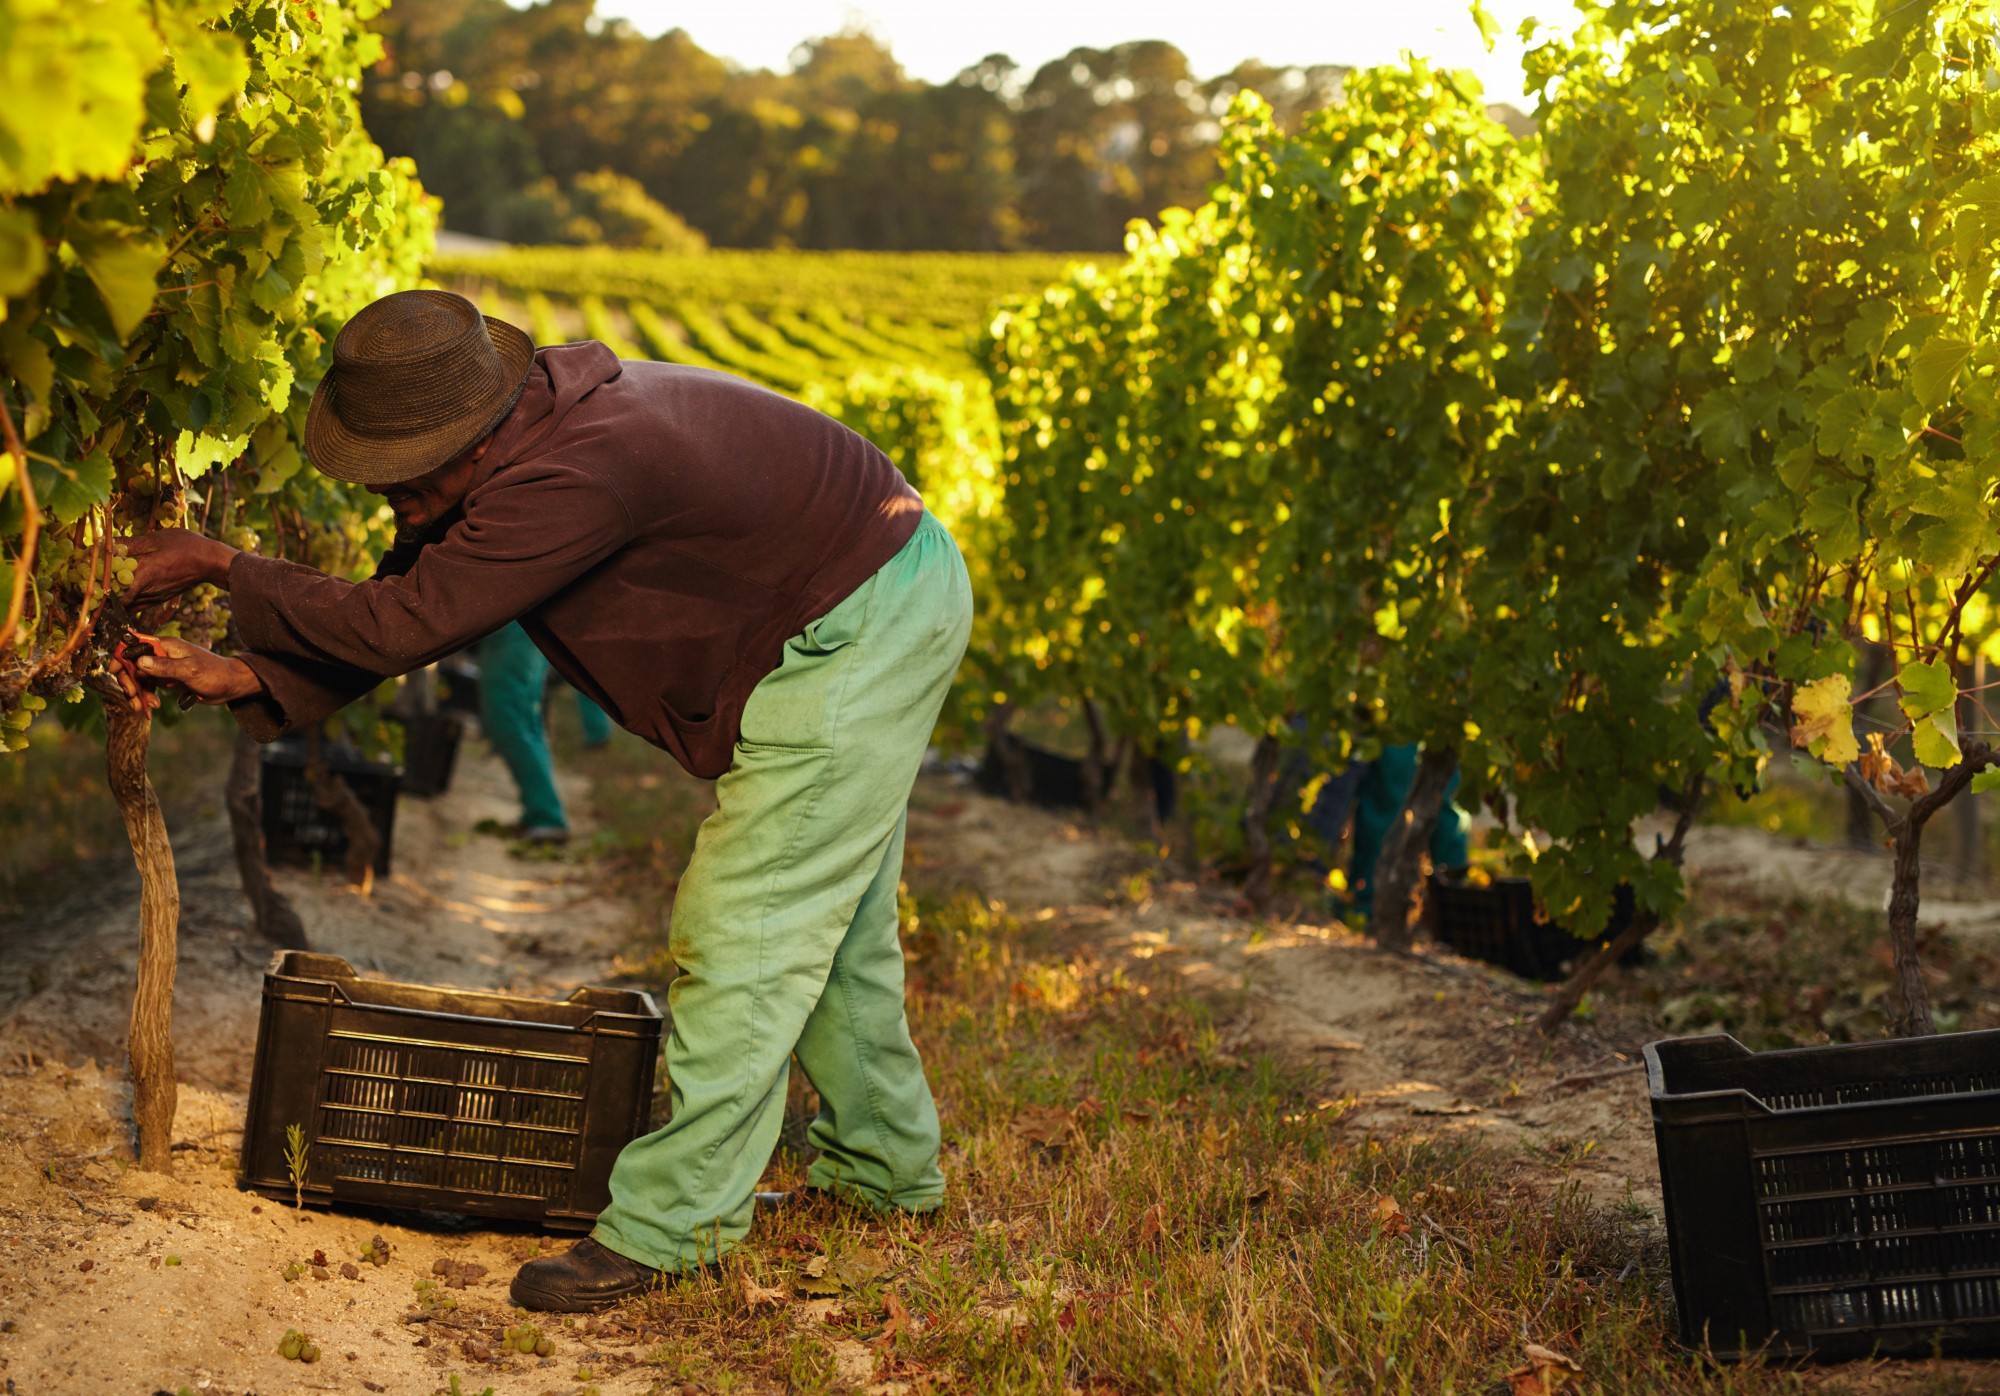 African farmer harvesting grapes in vineyard.